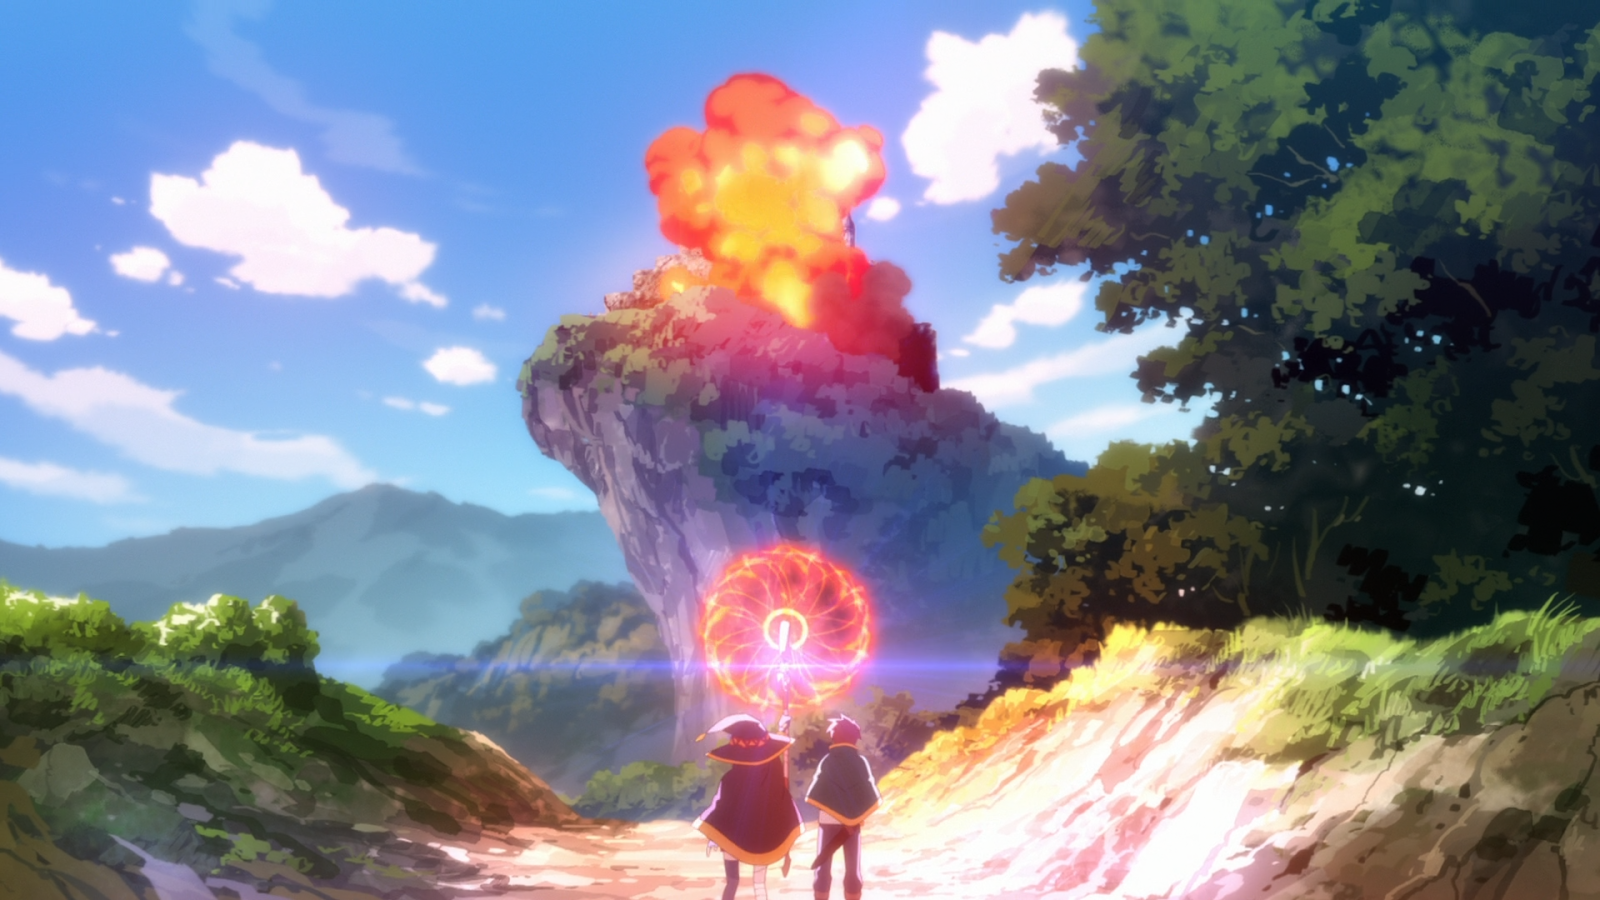 REVIEW, Megumin Origin Tale Delivers a Mid-Range Explosion